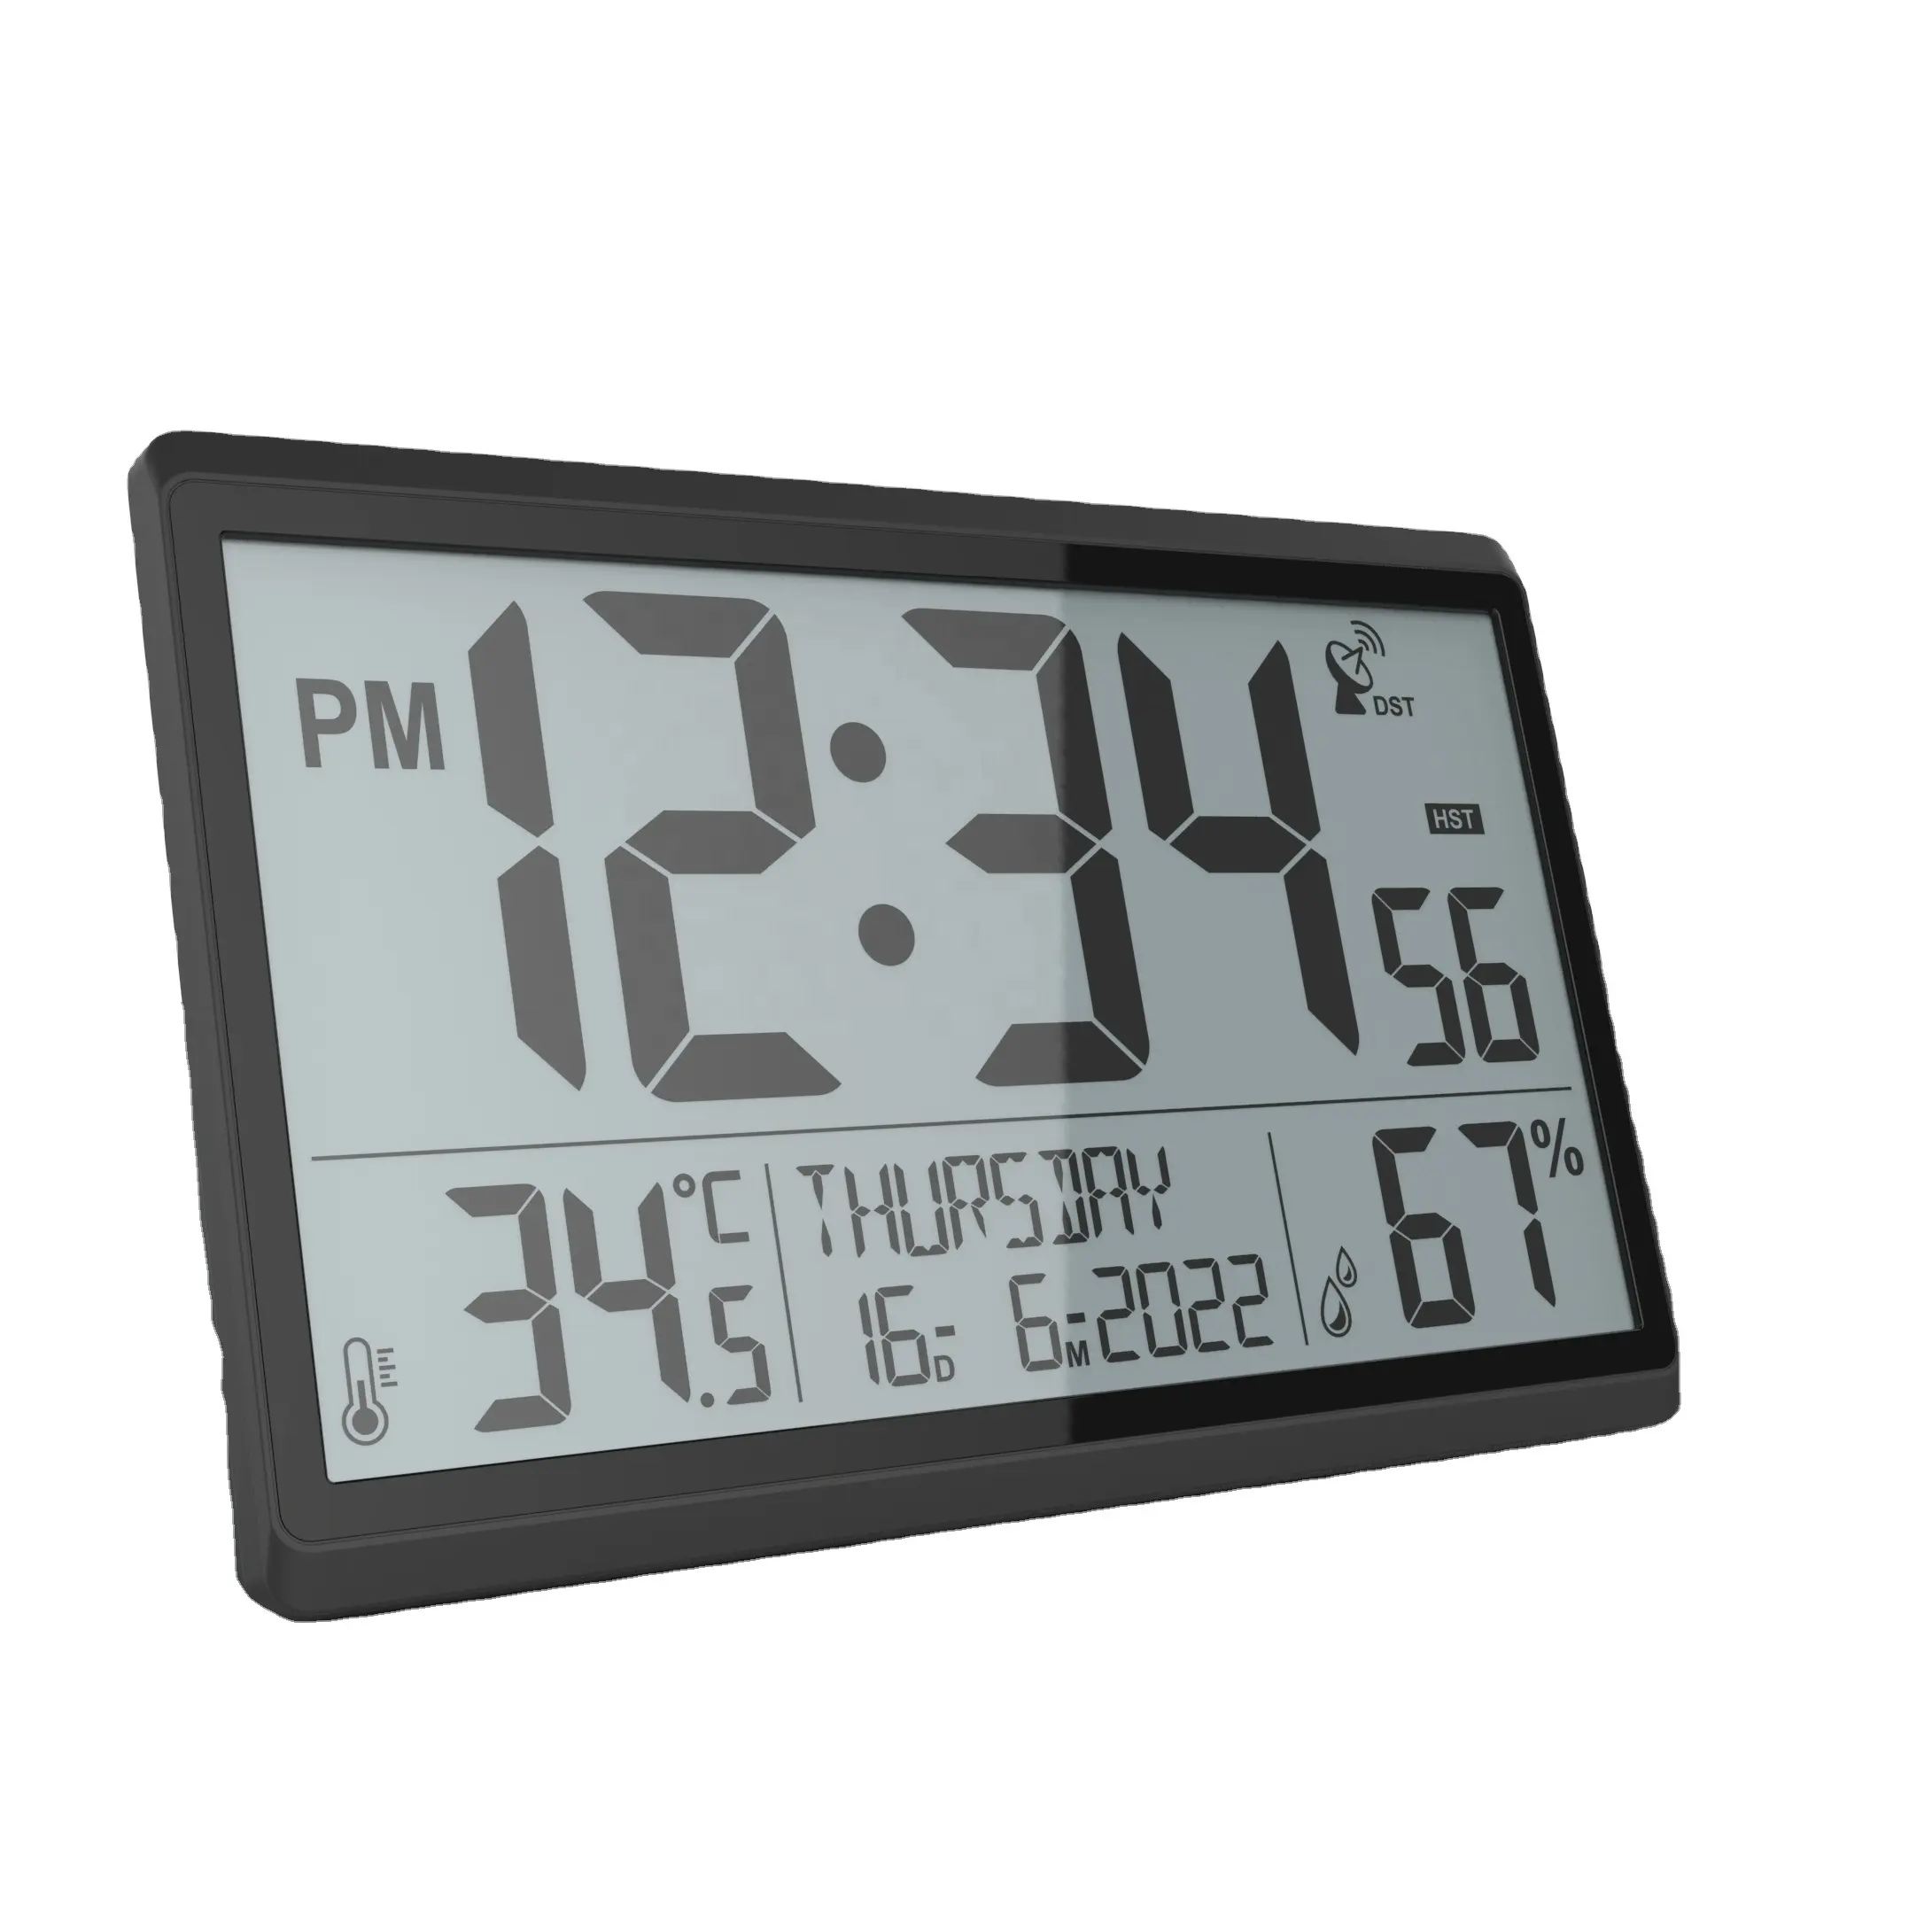 Jumbo LCD display Atomic Wall Clock Digital Calendar Alarm Day RCC WWVB Clock with Table Stand